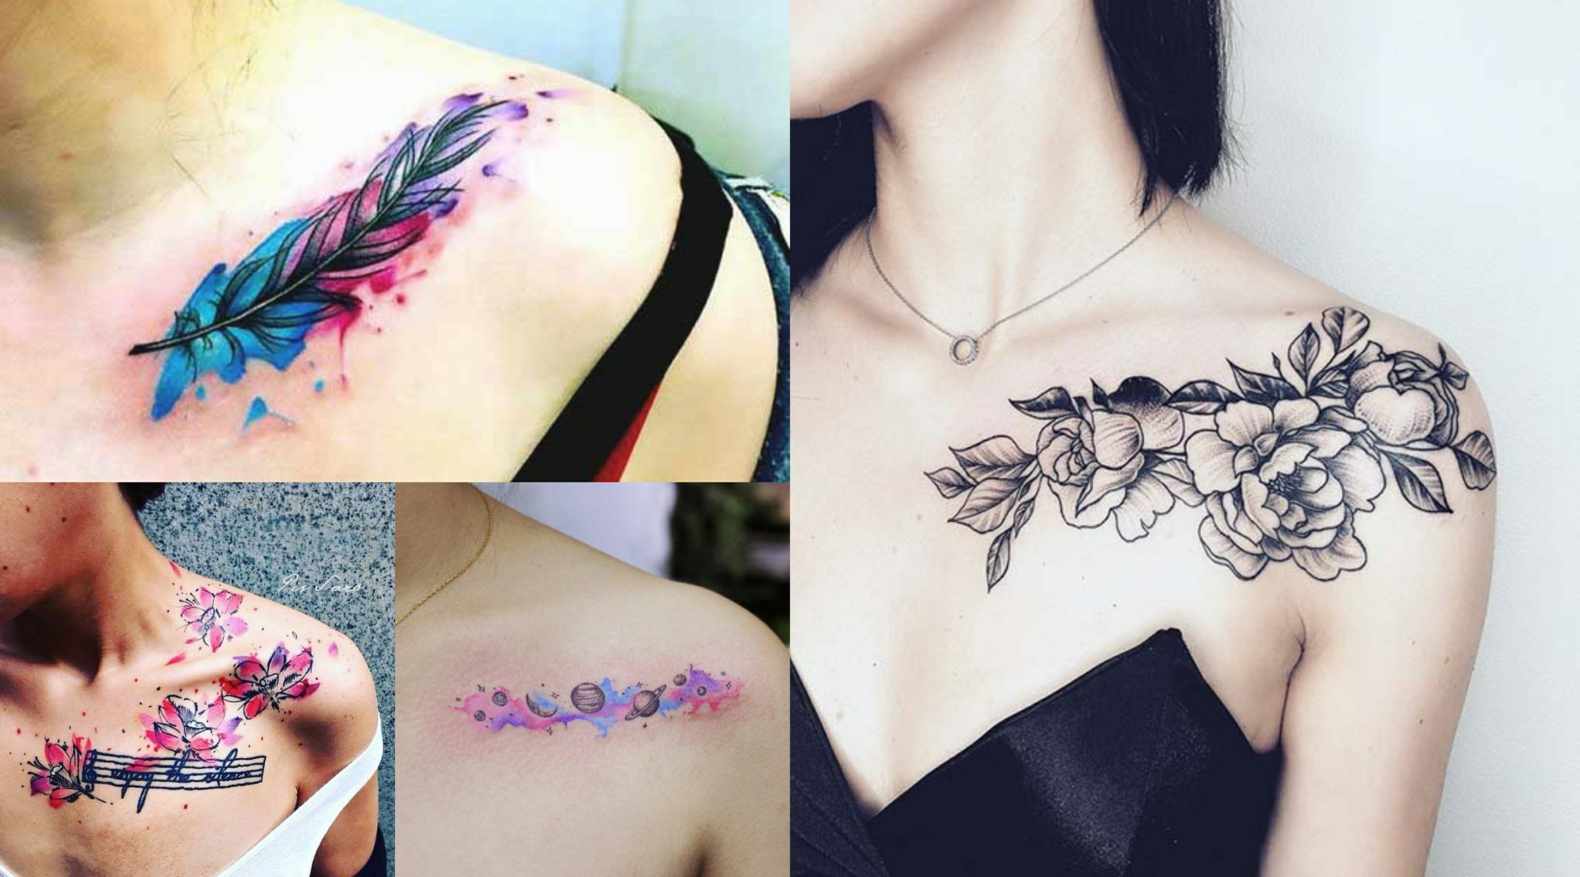 Tattoo design small women flower planets tattoo motif meaning